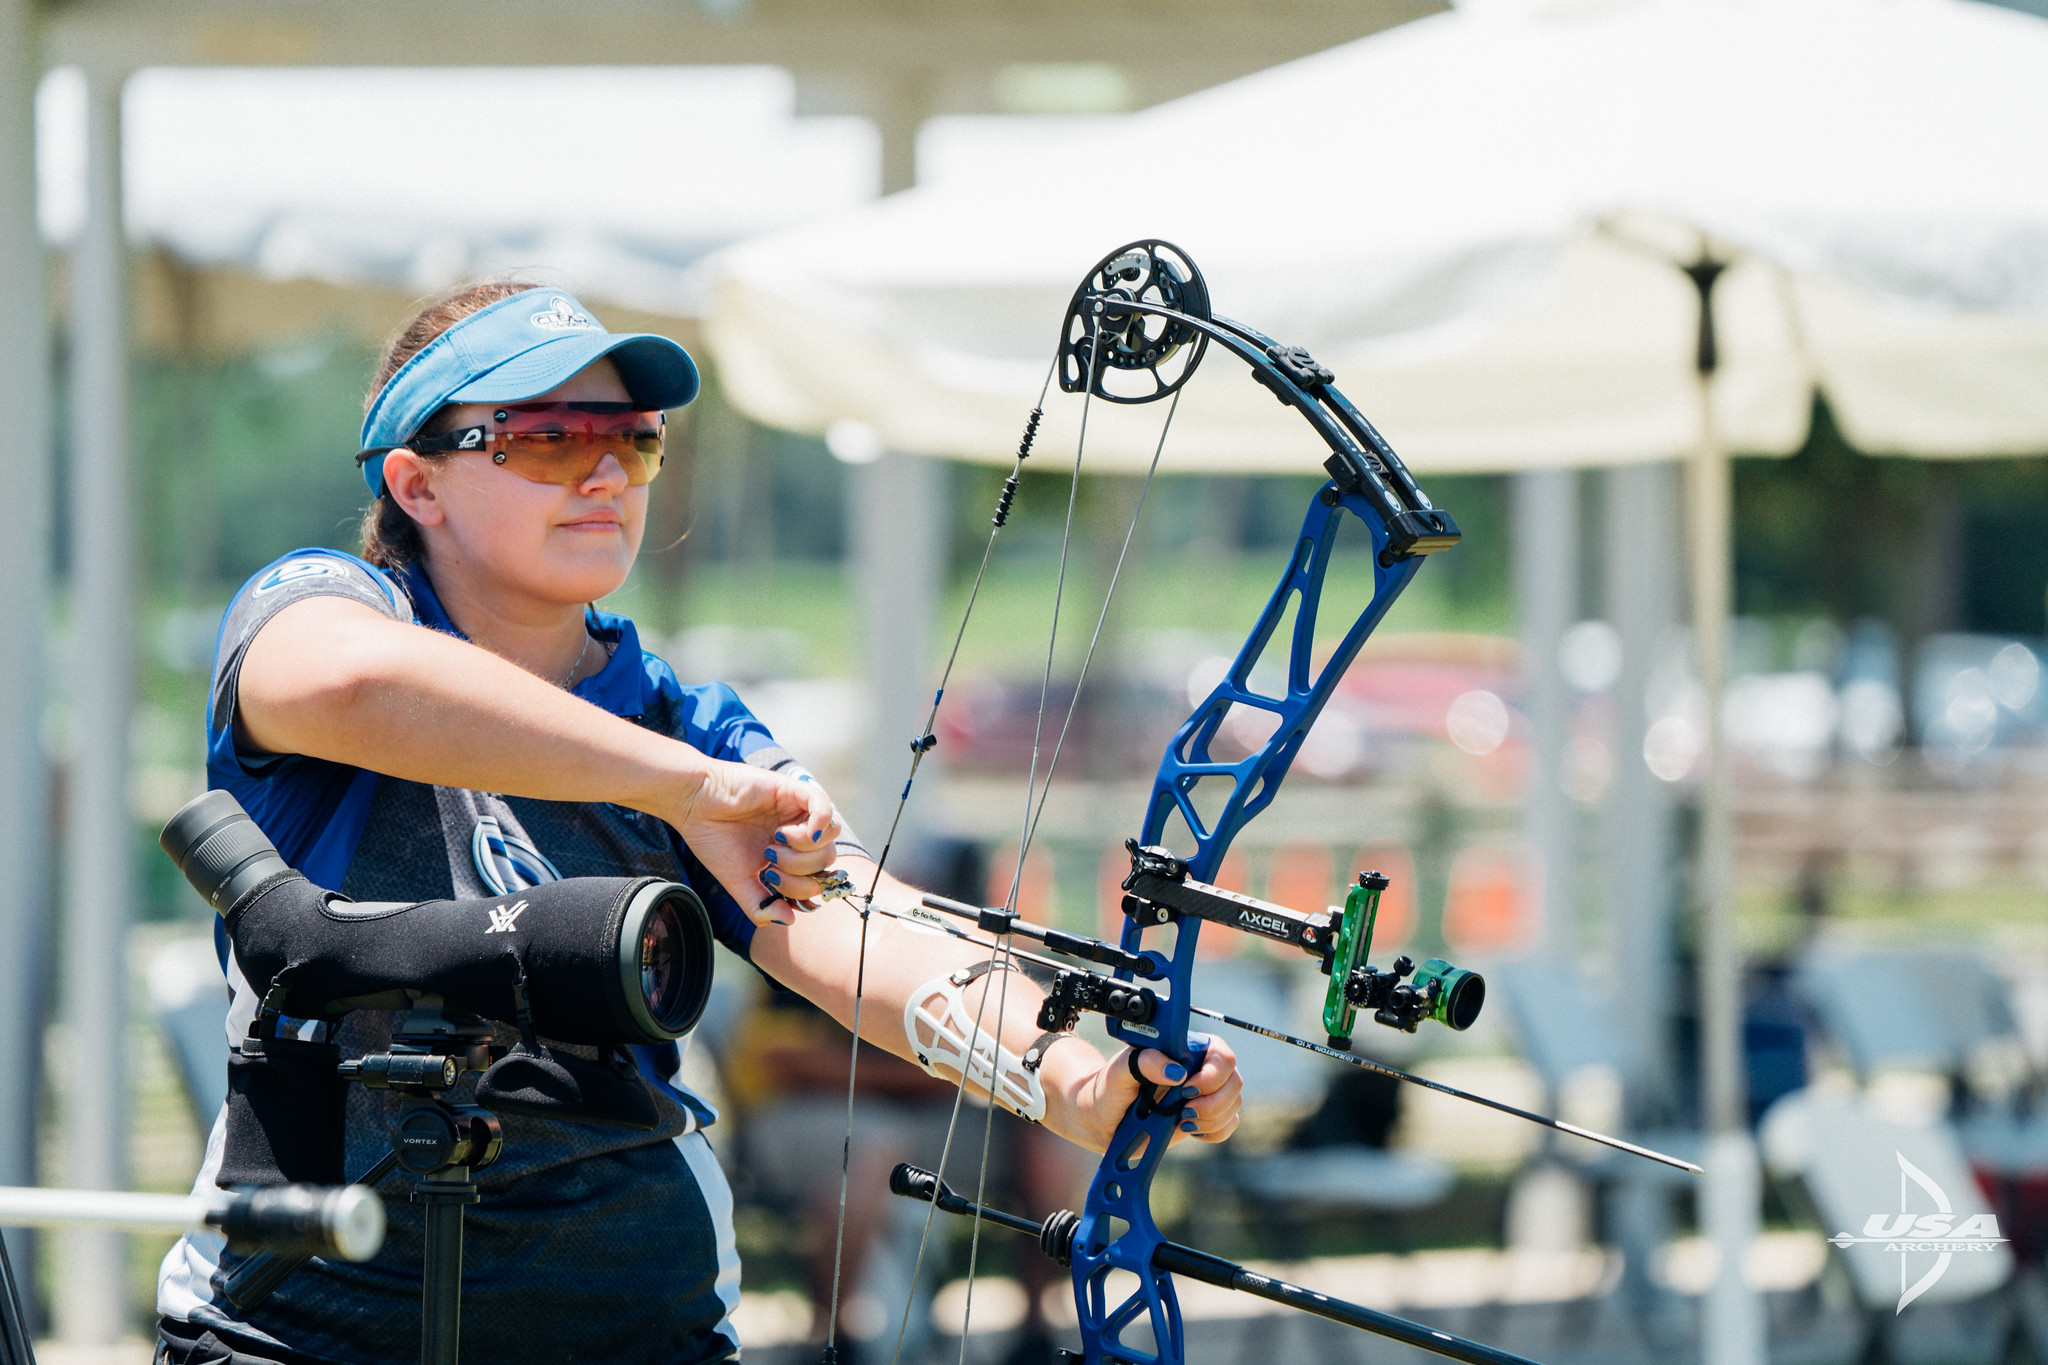 2021 World Archery Championships U.S. Team Trials Cut to Top Eight